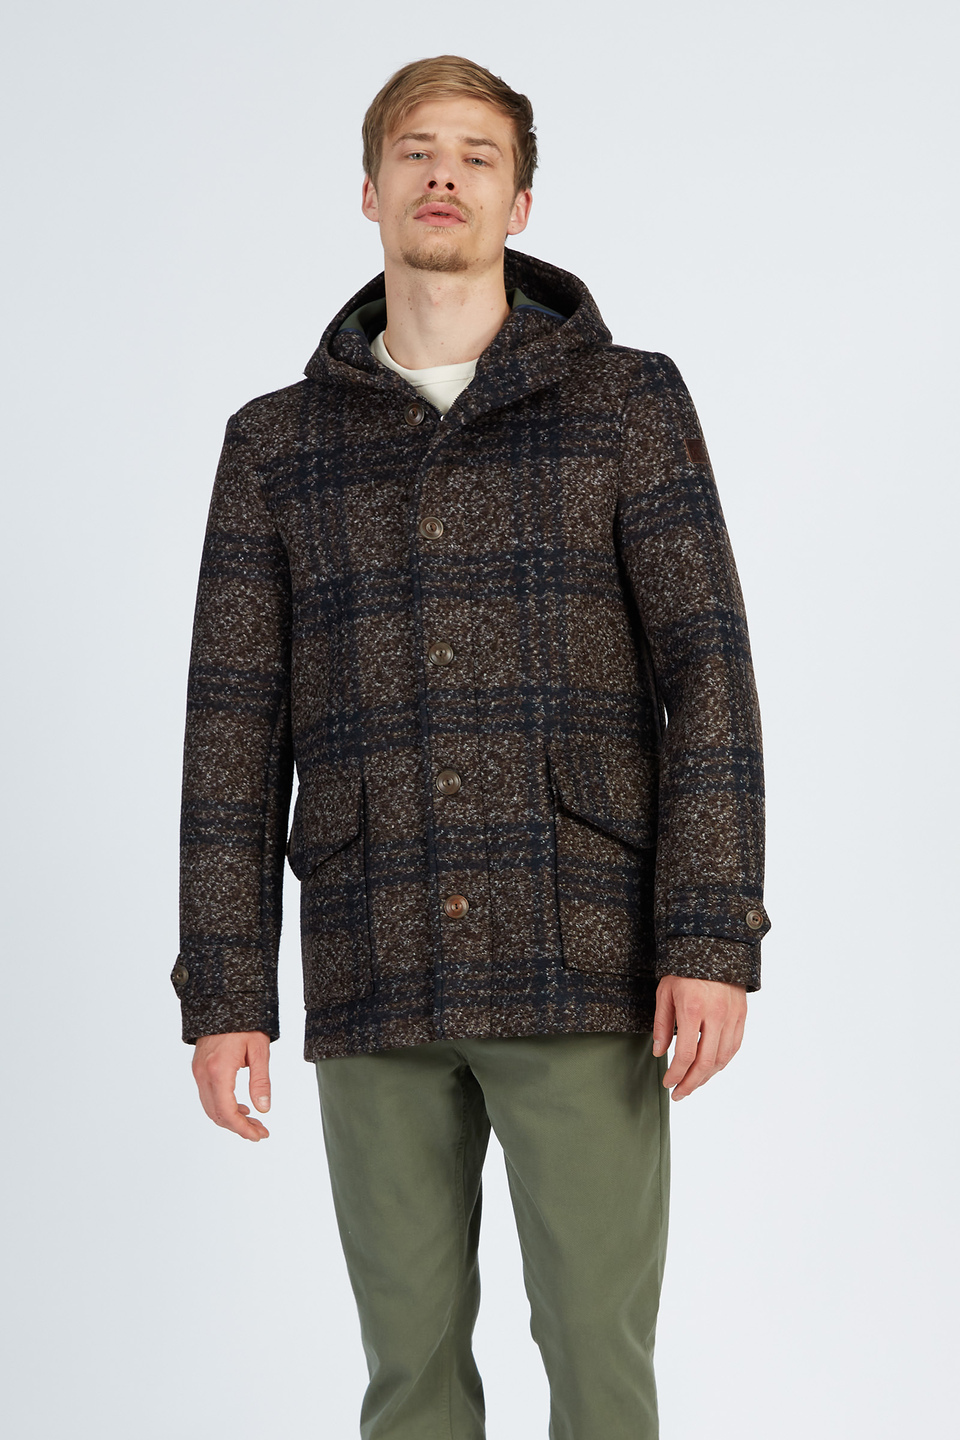 Leyendas Del Polo men’s wool blend jacket with buttons regular fit | La Martina - Official Online Shop